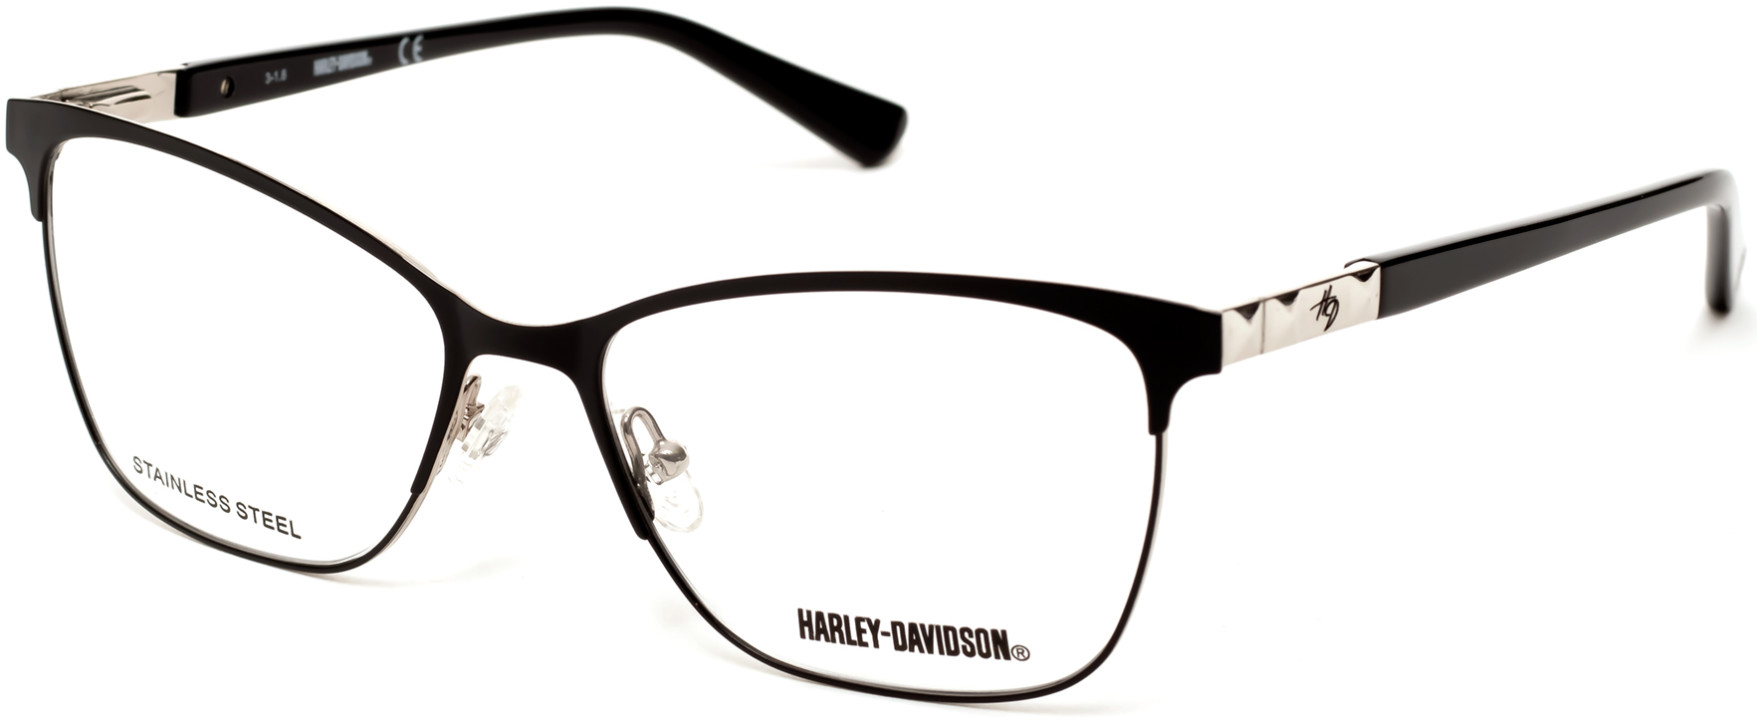 HARLEY DAVIDSON 0547 002